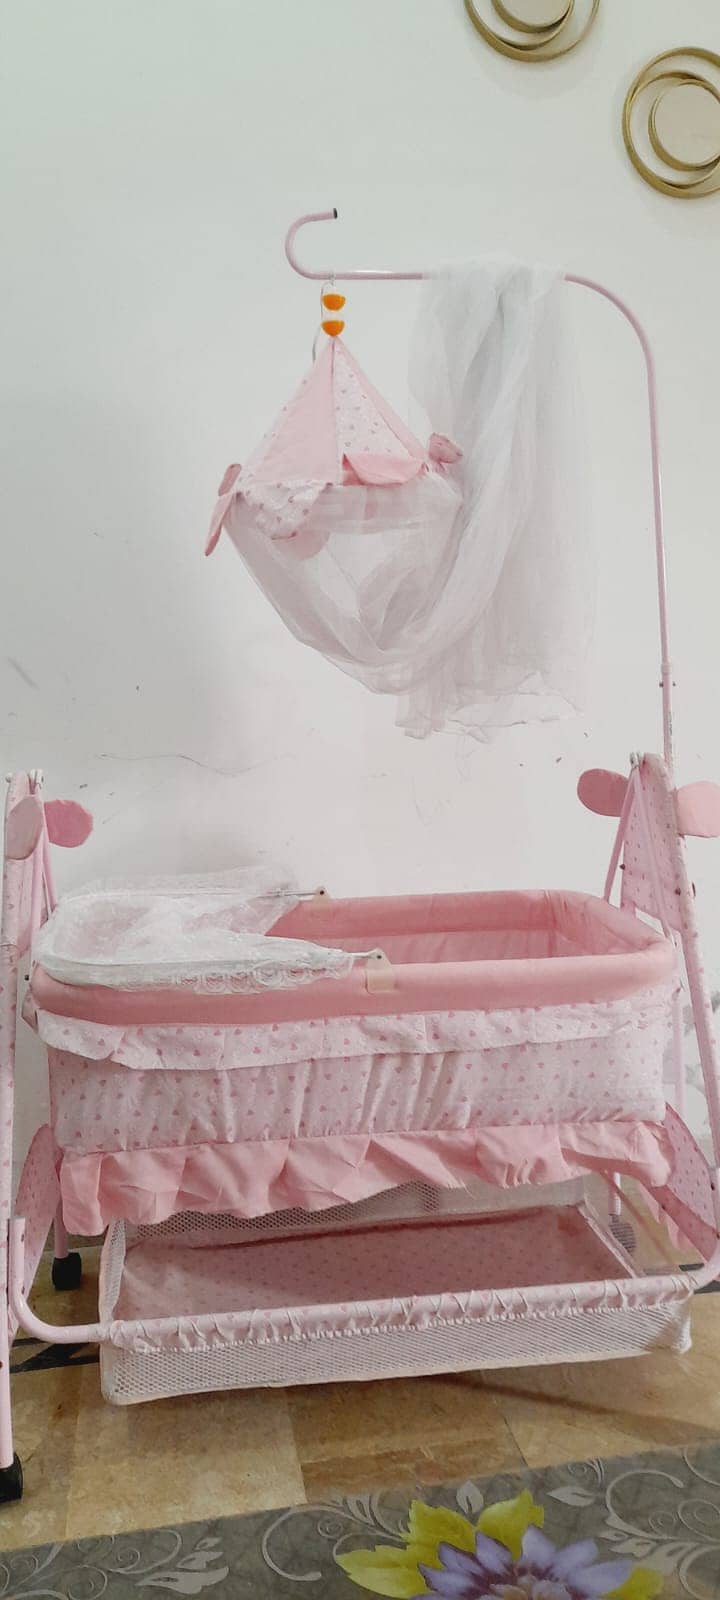 Baby cot / Baby beds / Kid baby cot / Kids furniture 2